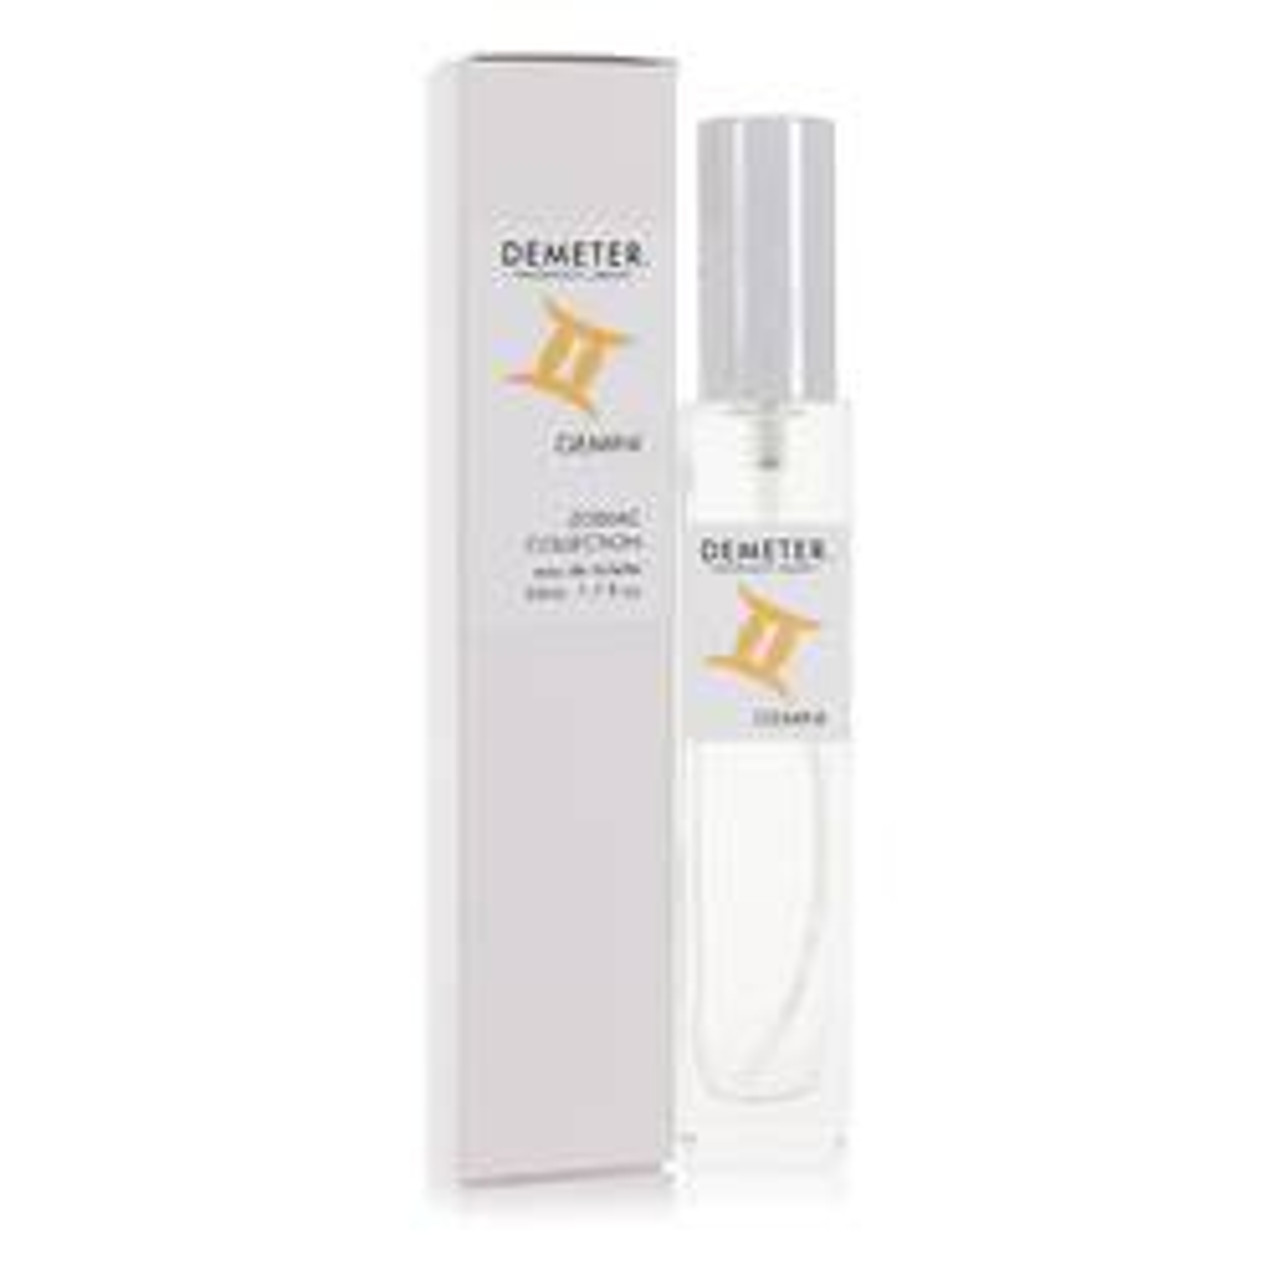 Demeter Gemini Perfume By Demeter Eau De Toilette Spray 1.7 oz for Women - [From 63.00 - Choose pk Qty ] - *Ships from Miami